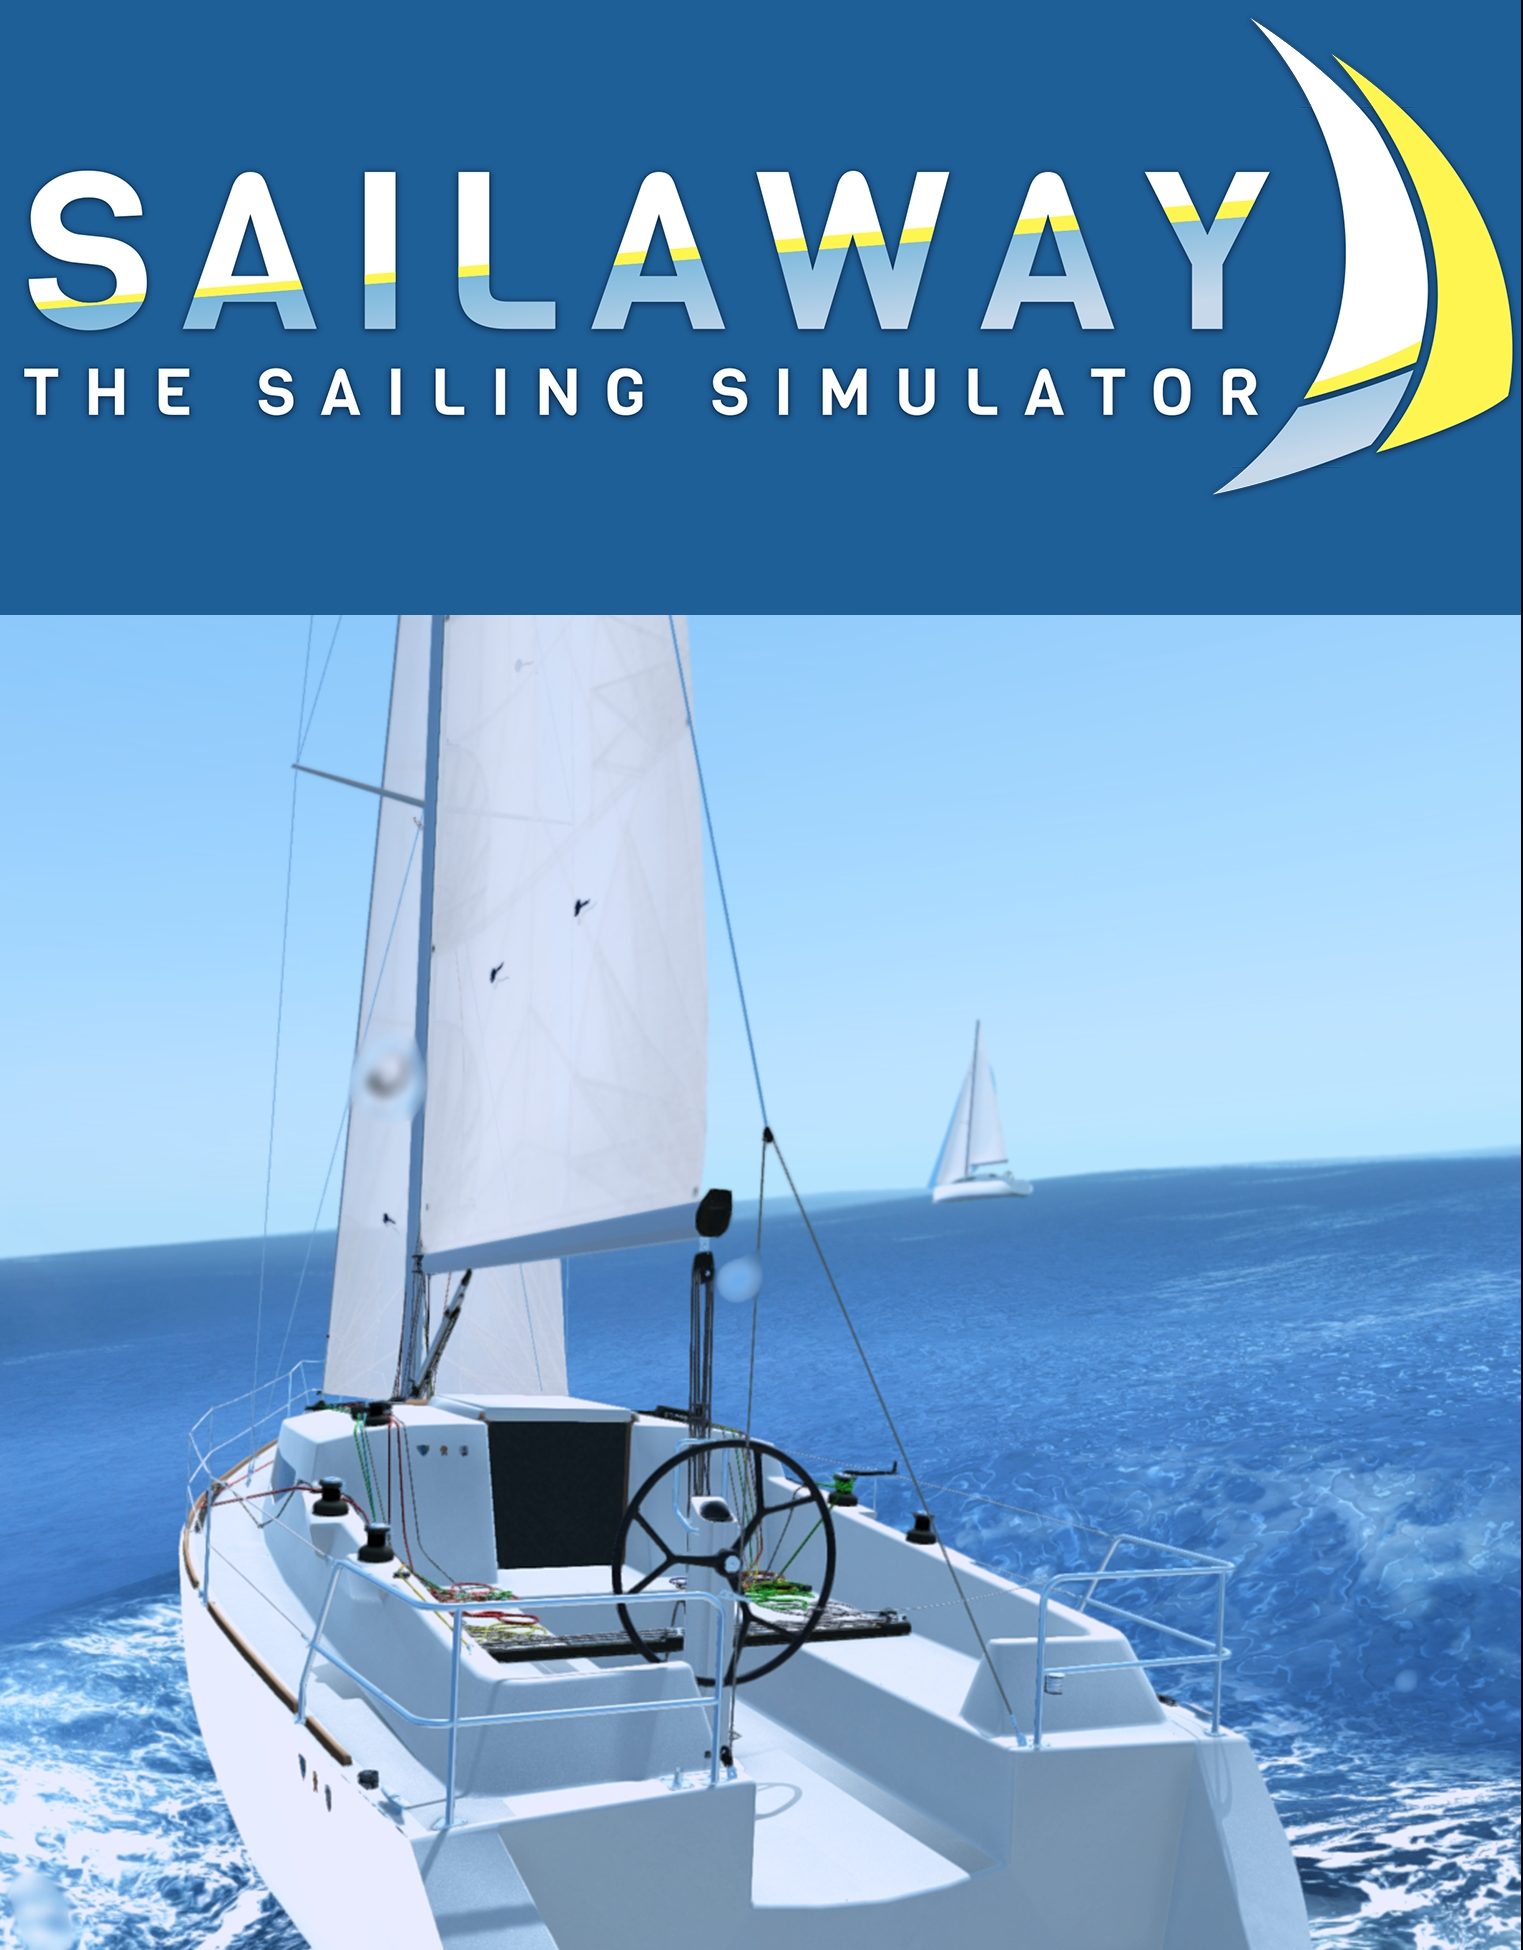 Sailaway – The Sailing Simulator